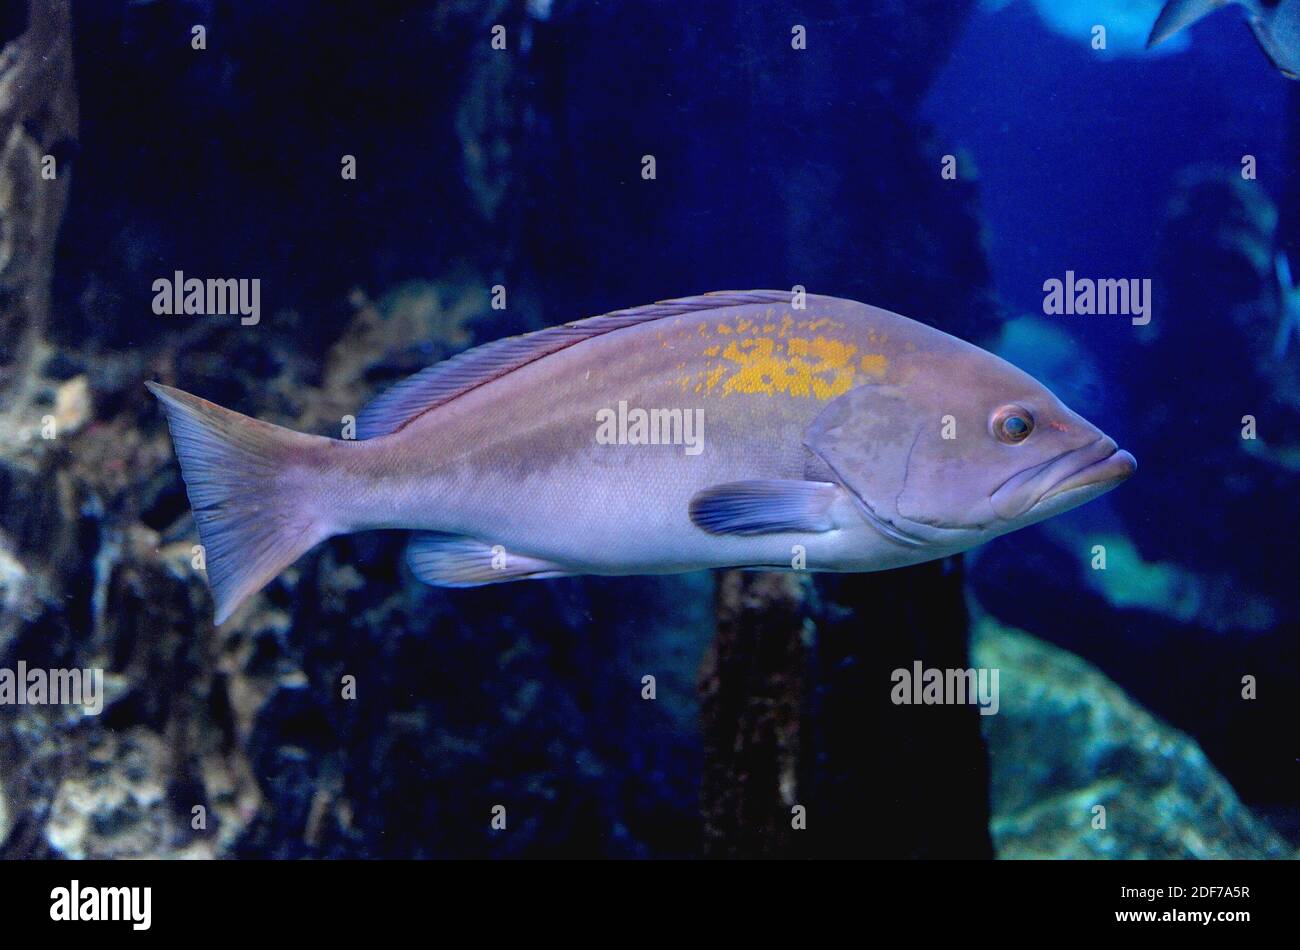 Goldblotch grouper (Epinephelus costae) is a marine fish native to Mediterranean Sea and eastern Atlantic Ocean. Stock Photo